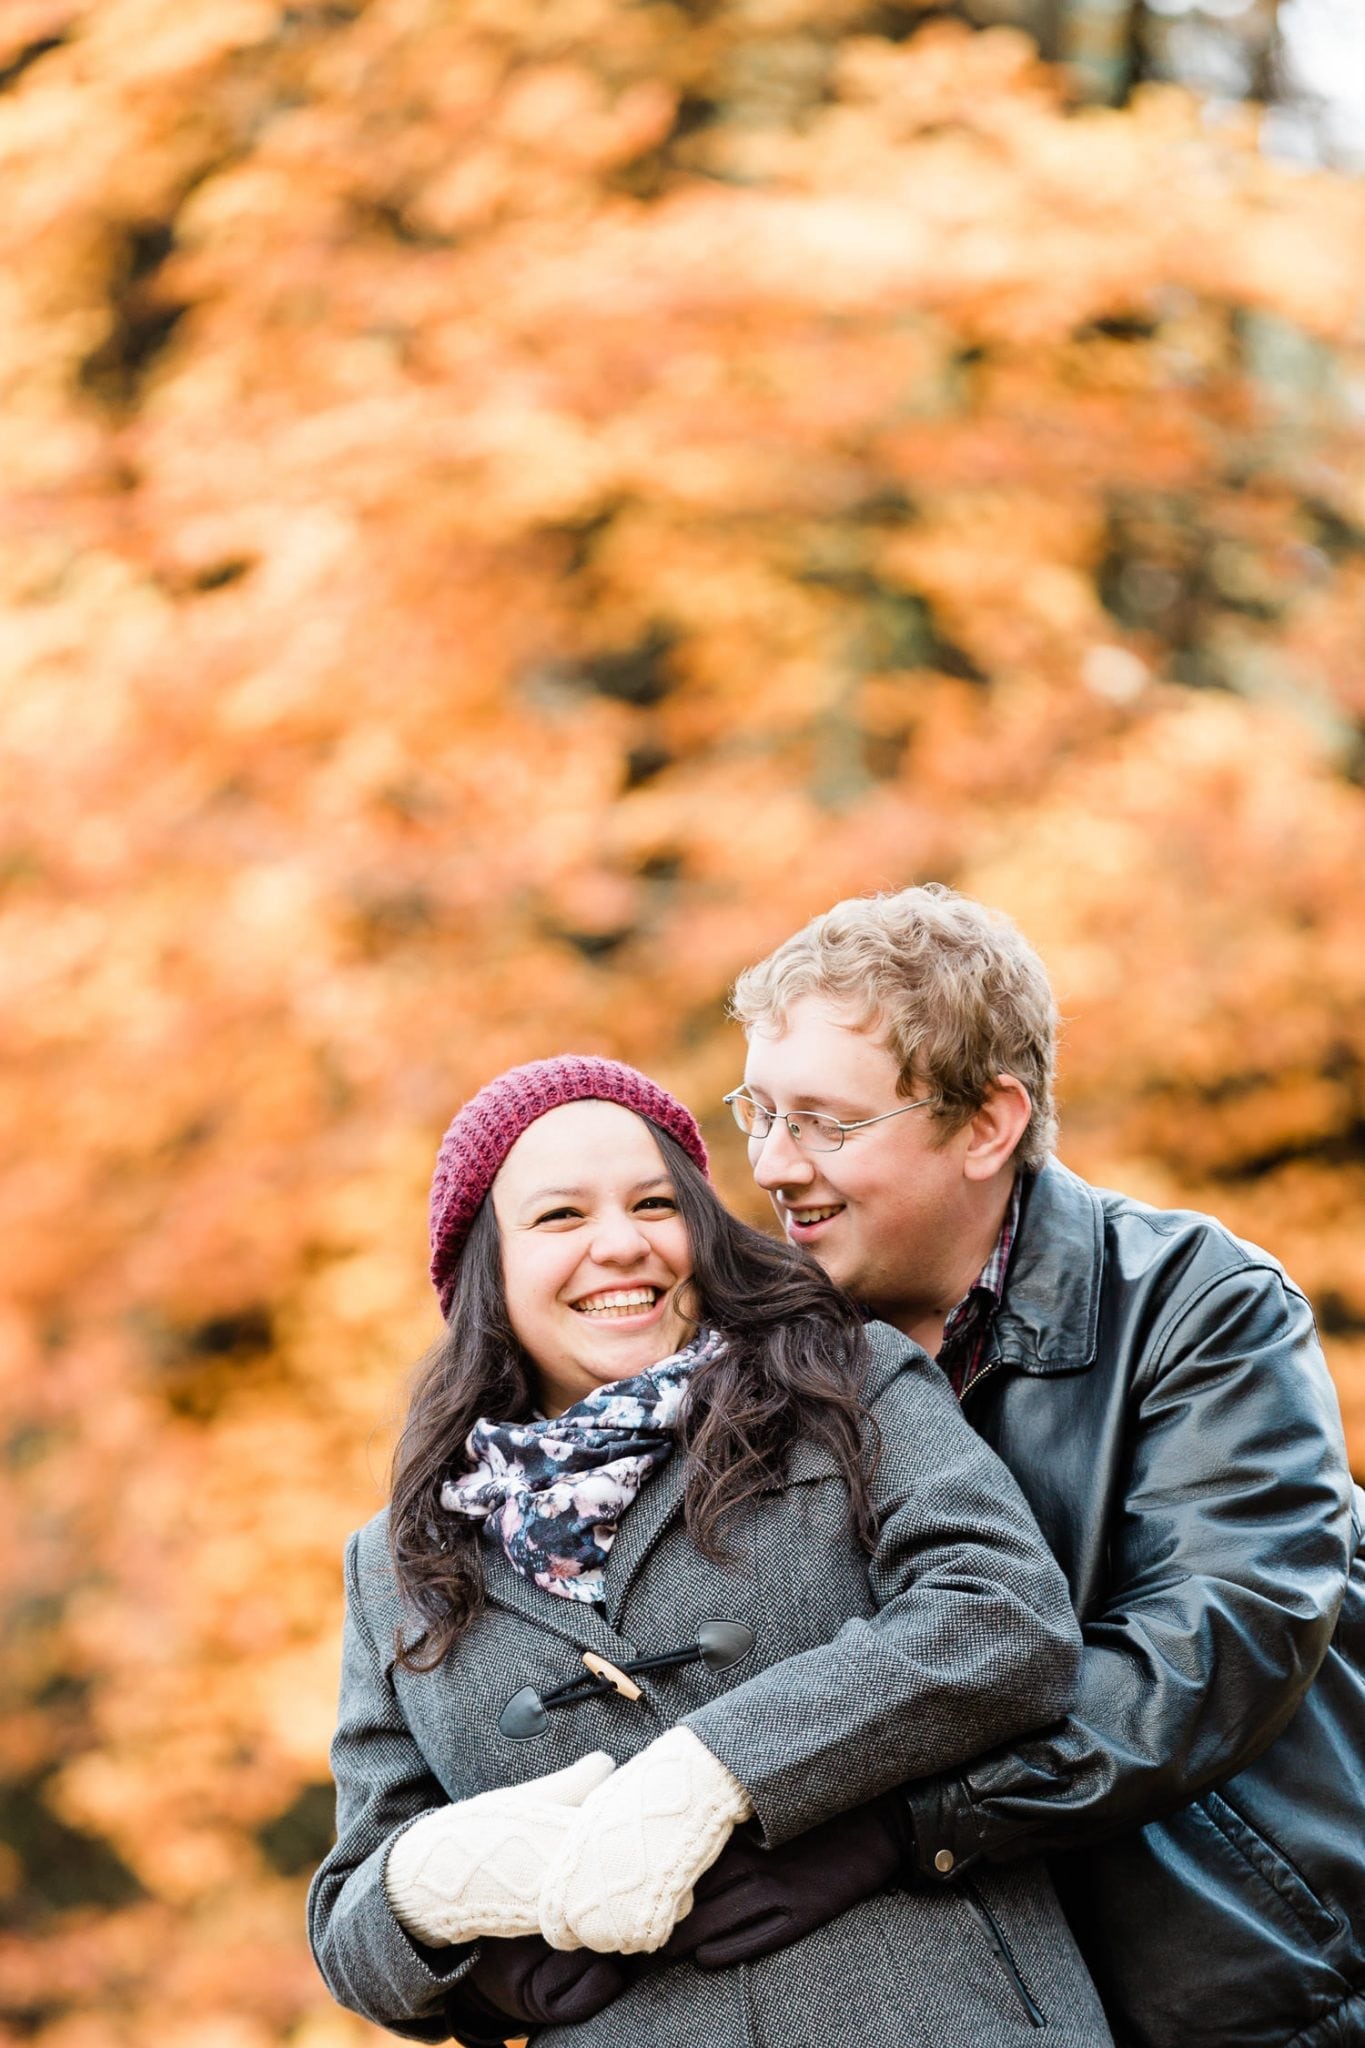 Colony farm park engagement story | Vancouver wedding photographer